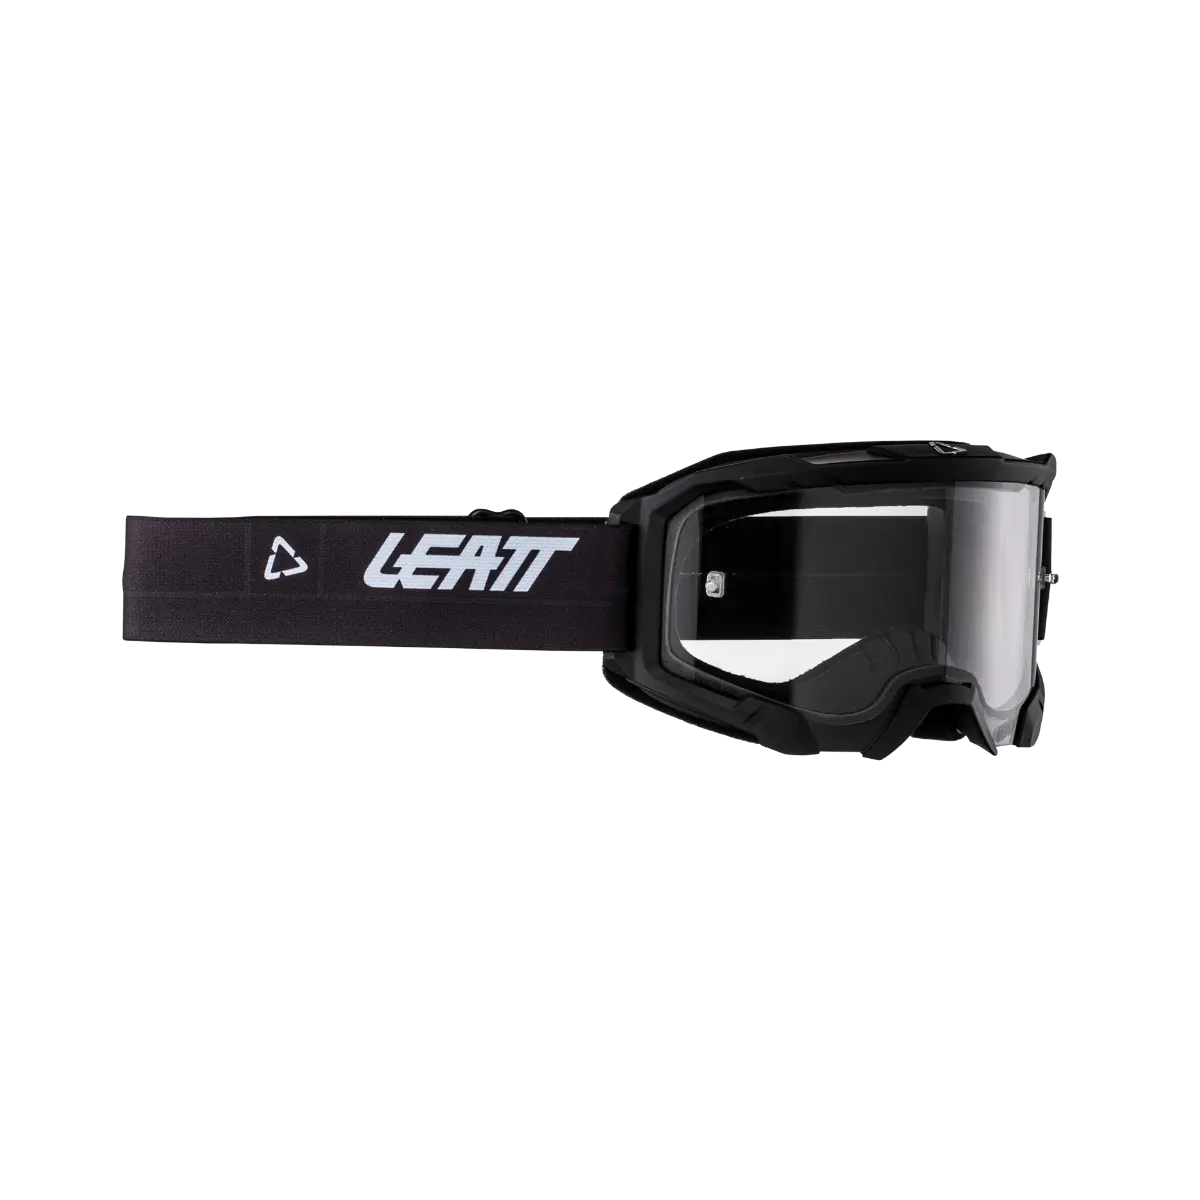 Leatt Goggle Velocity 4.5 Black Light Grey 58%